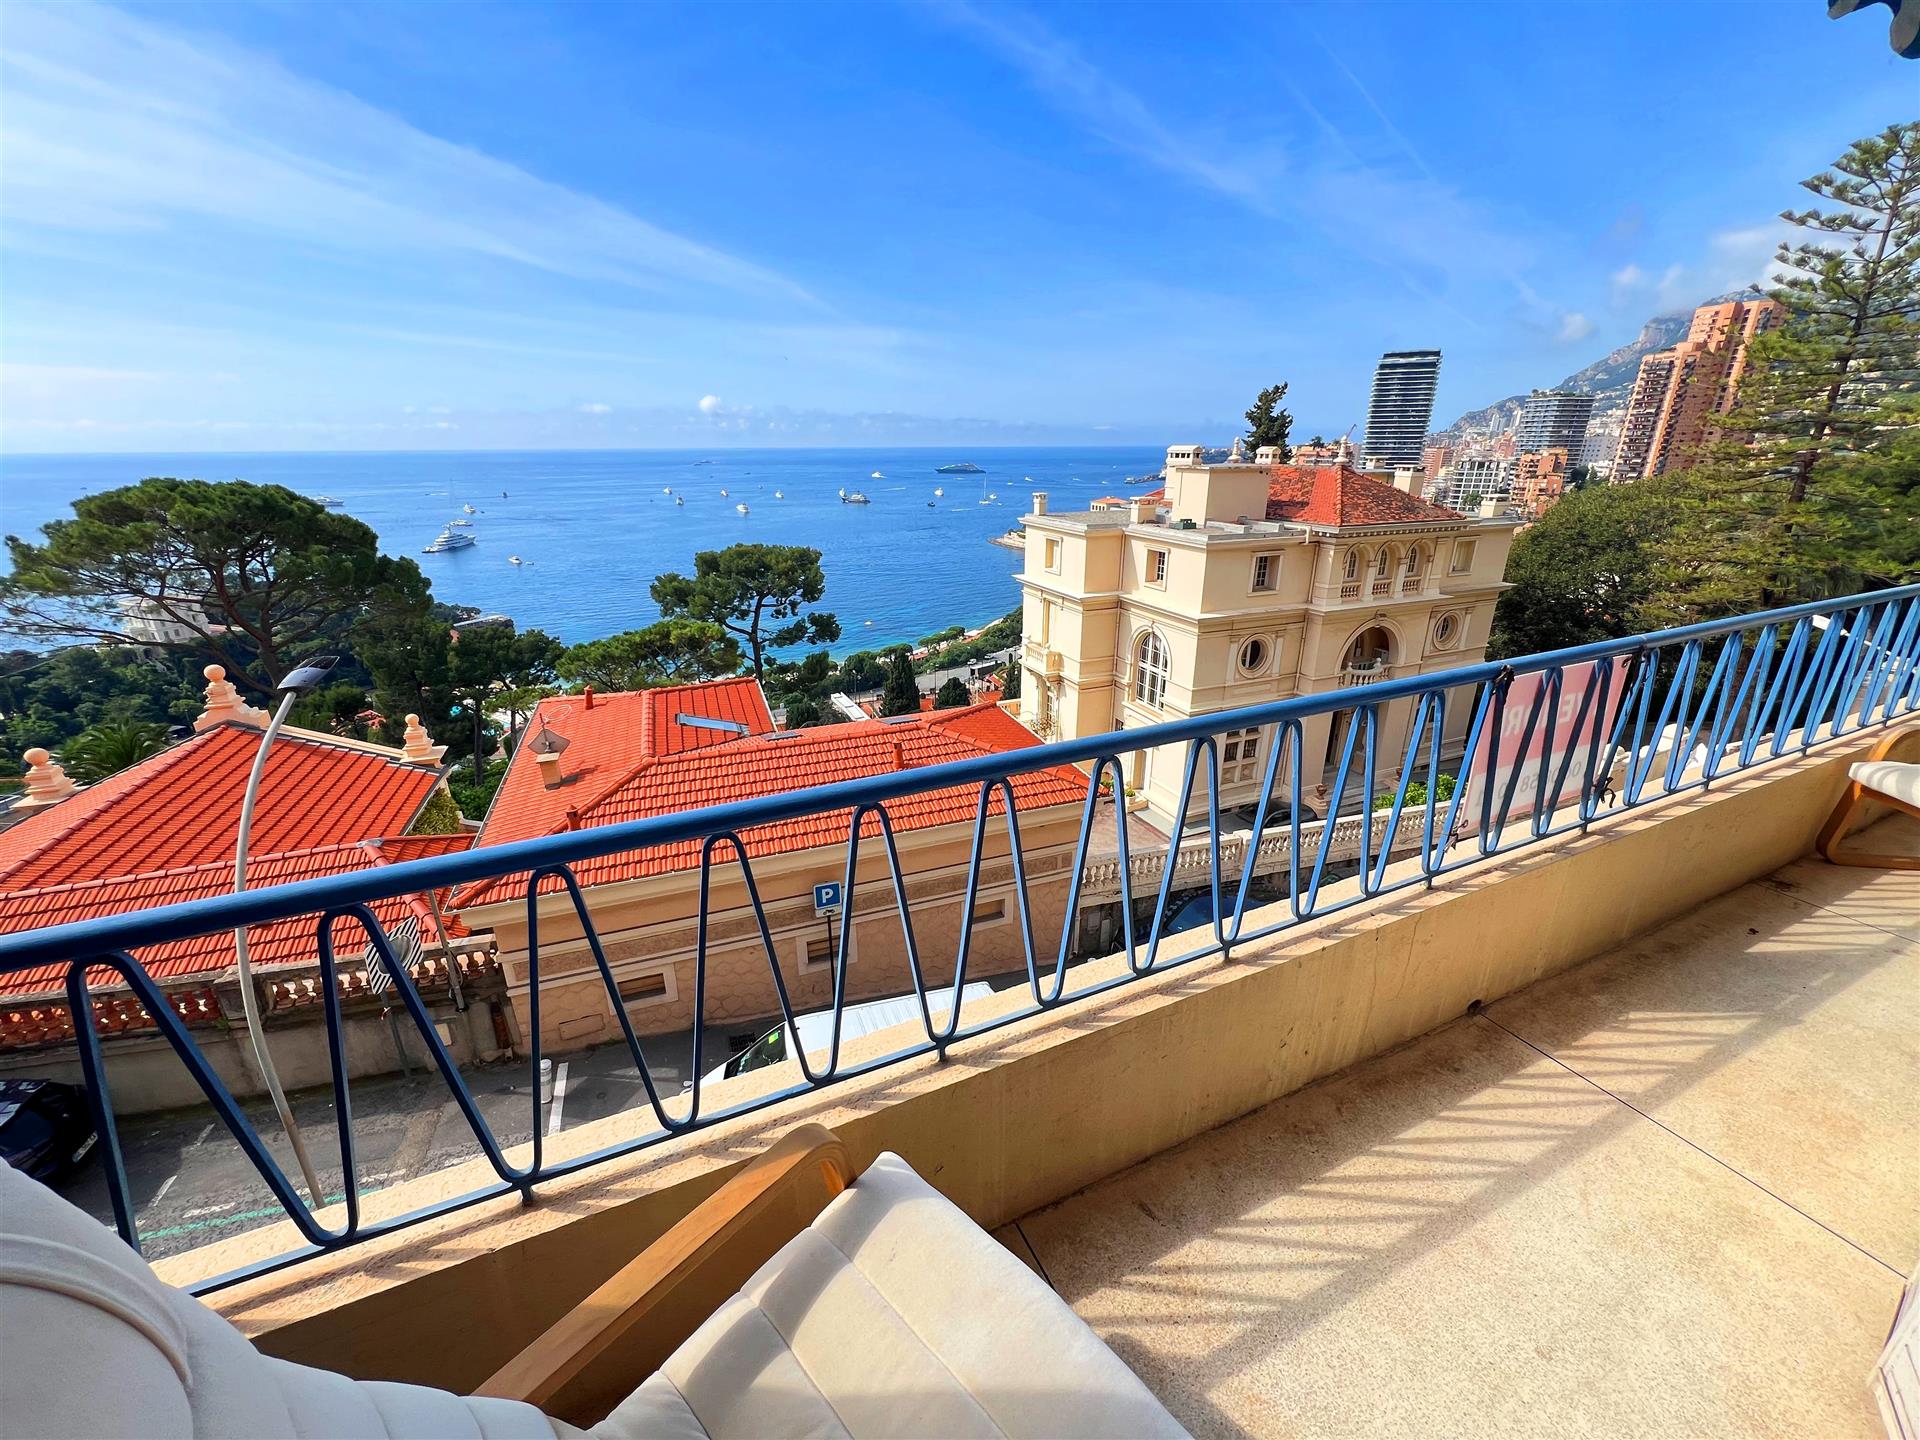 Borer Monaco, sea view